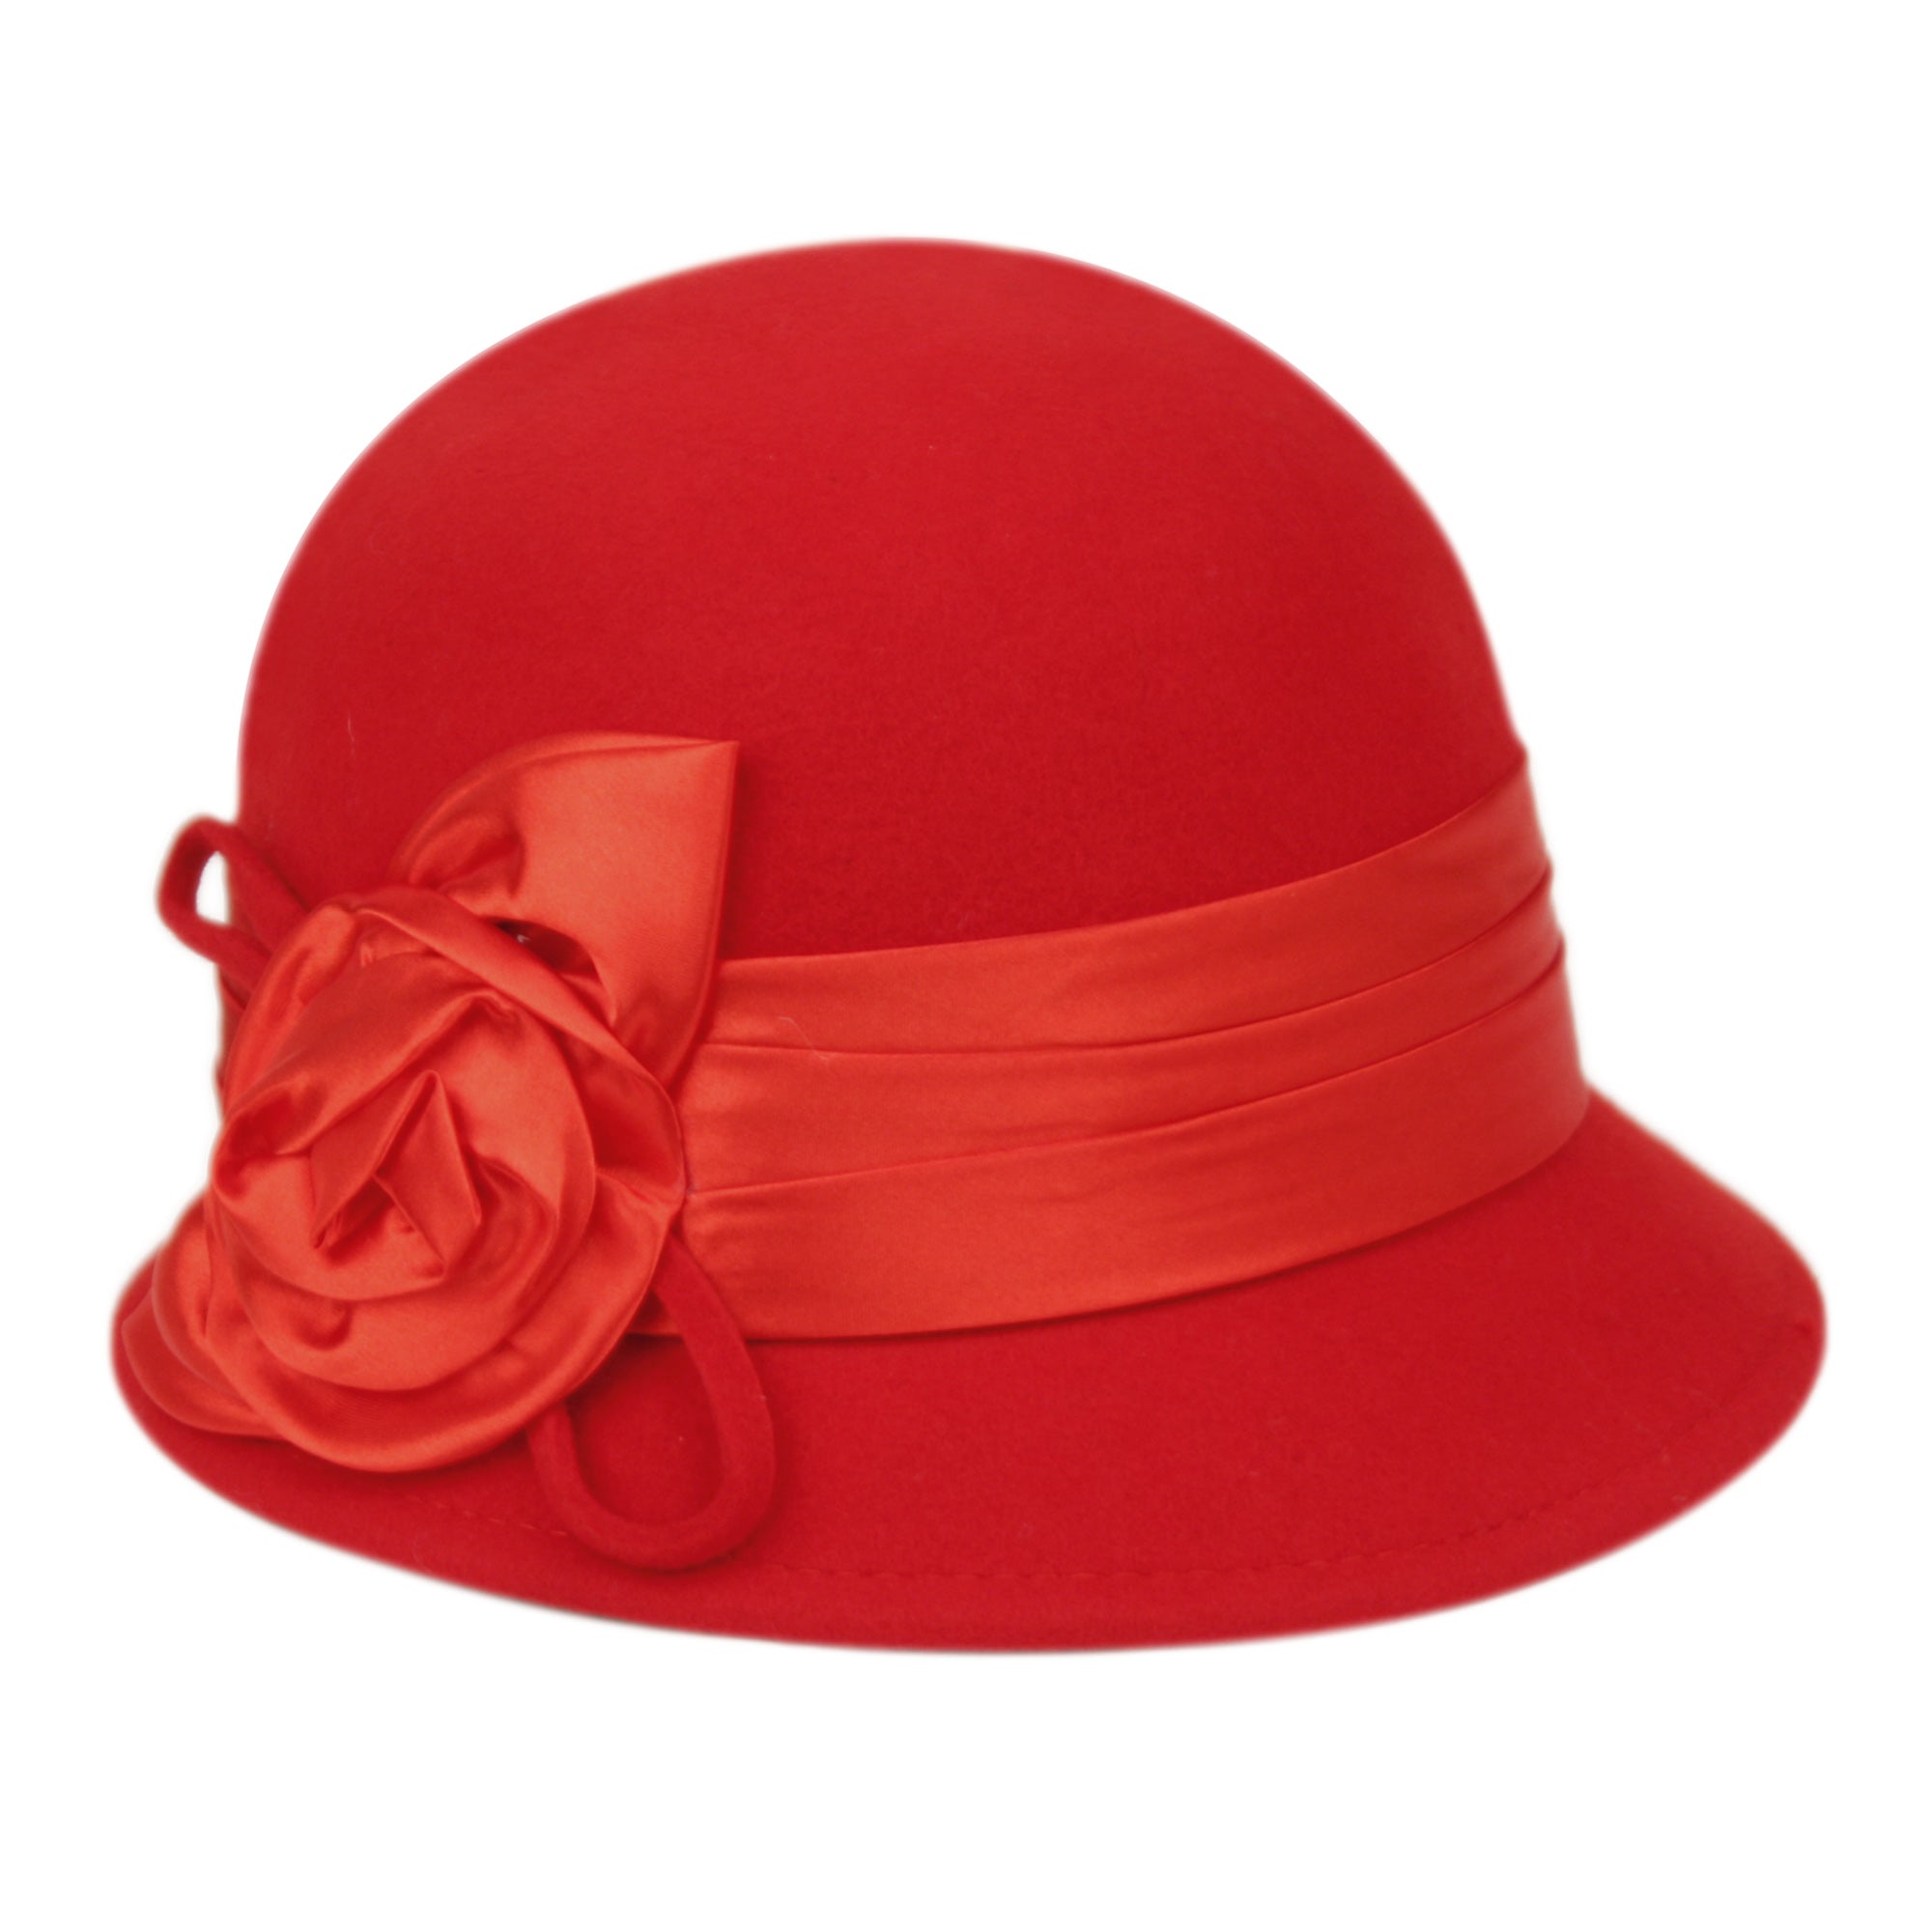 Women's Wool Felt Vintage Cloche Bucket Winter Hat with Satin Flower Red